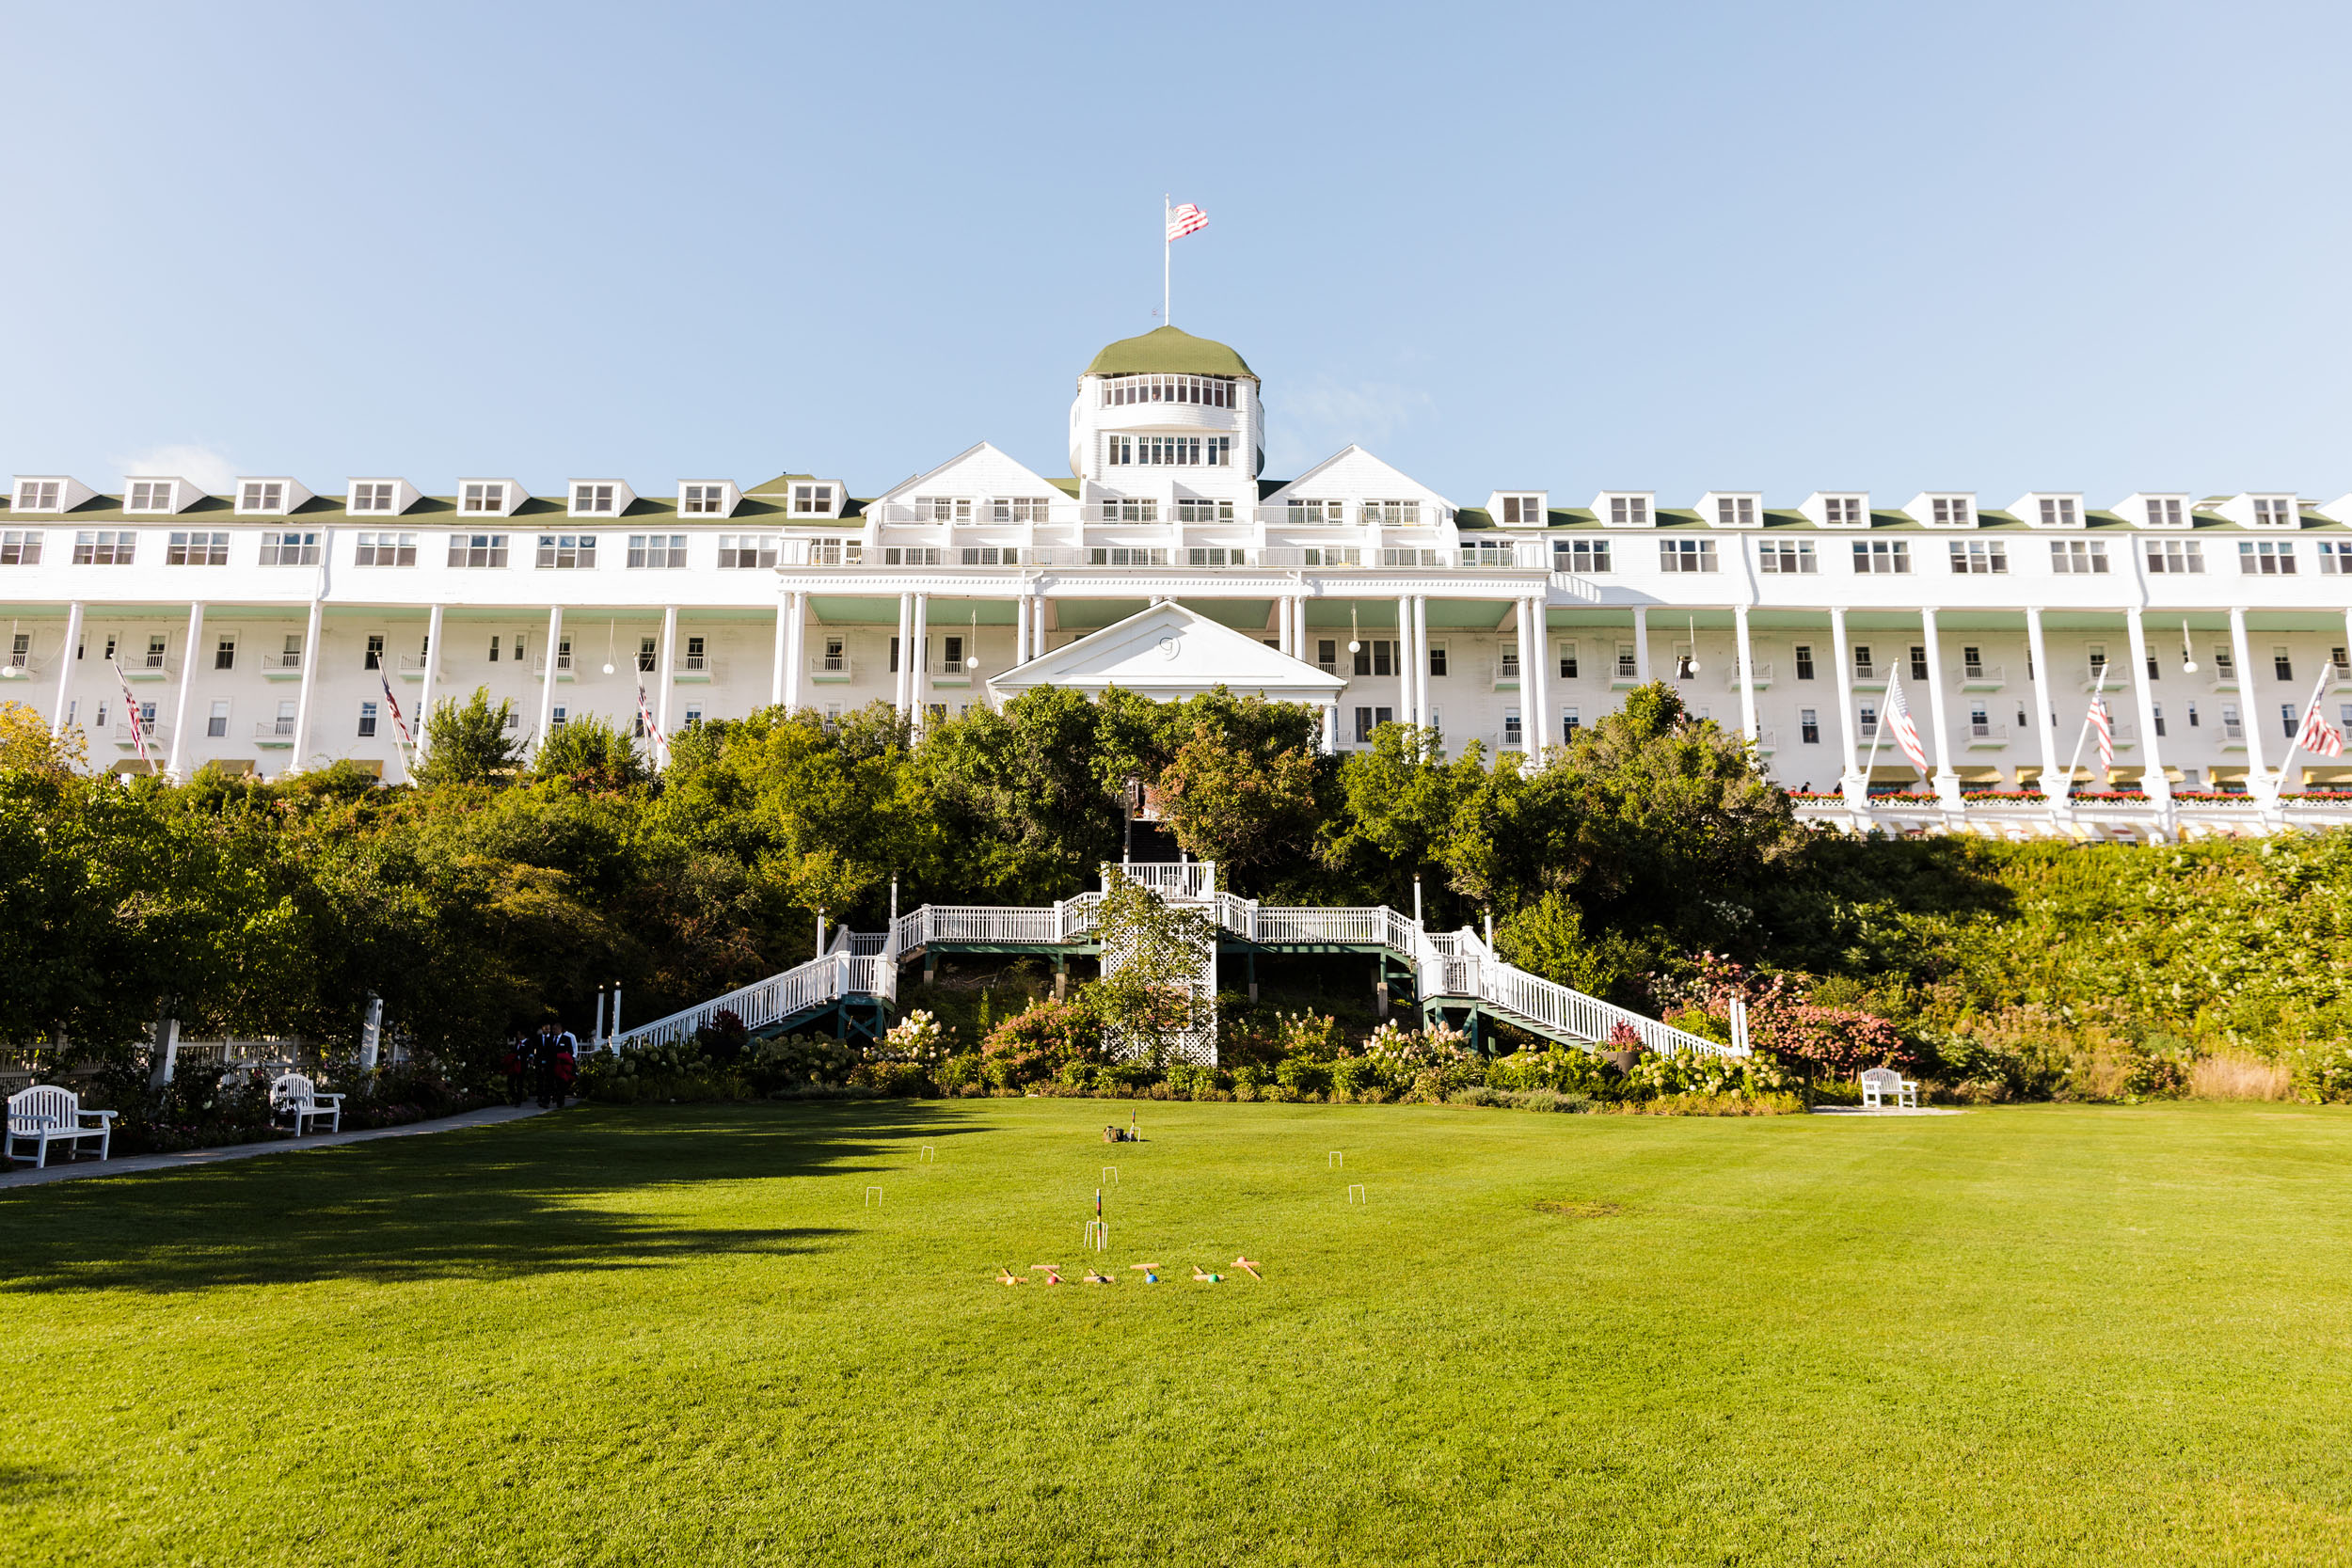 Landscape photo of the Grand Hotel - The Grand Hotel Hospitality Marketing